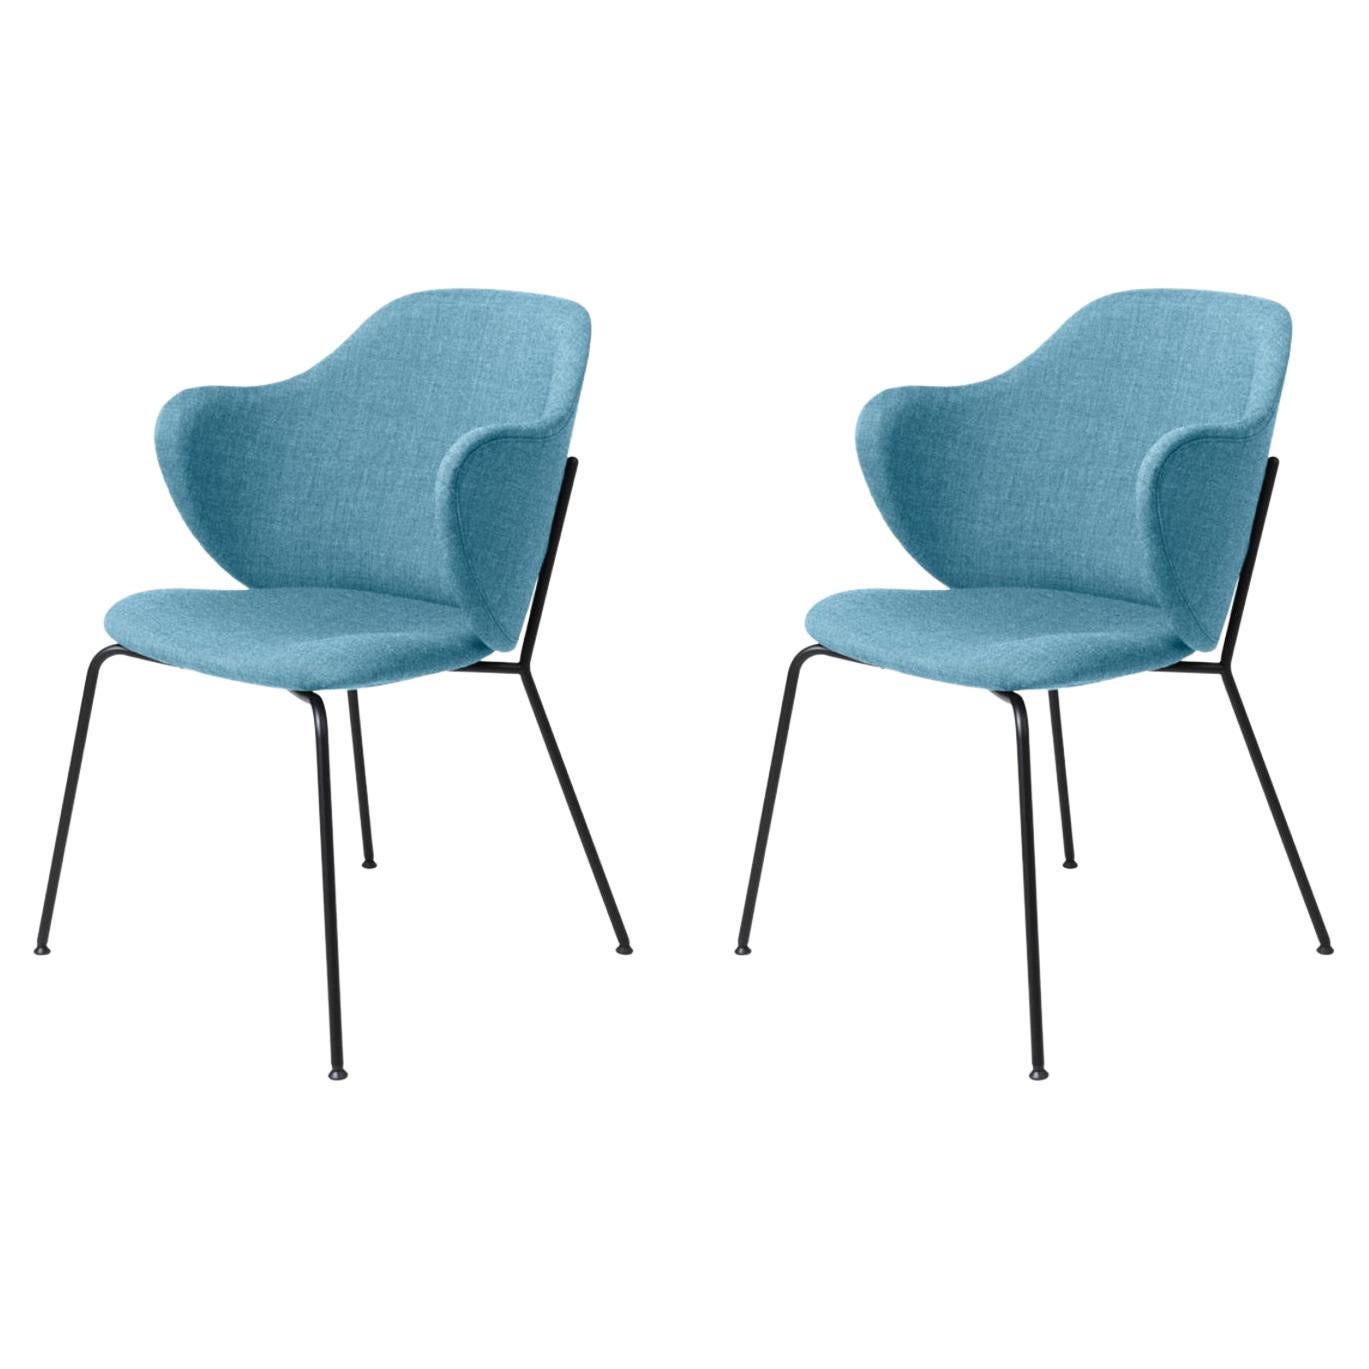 Set of 2 Blue Remix Lassen Chairs by Lassen For Sale